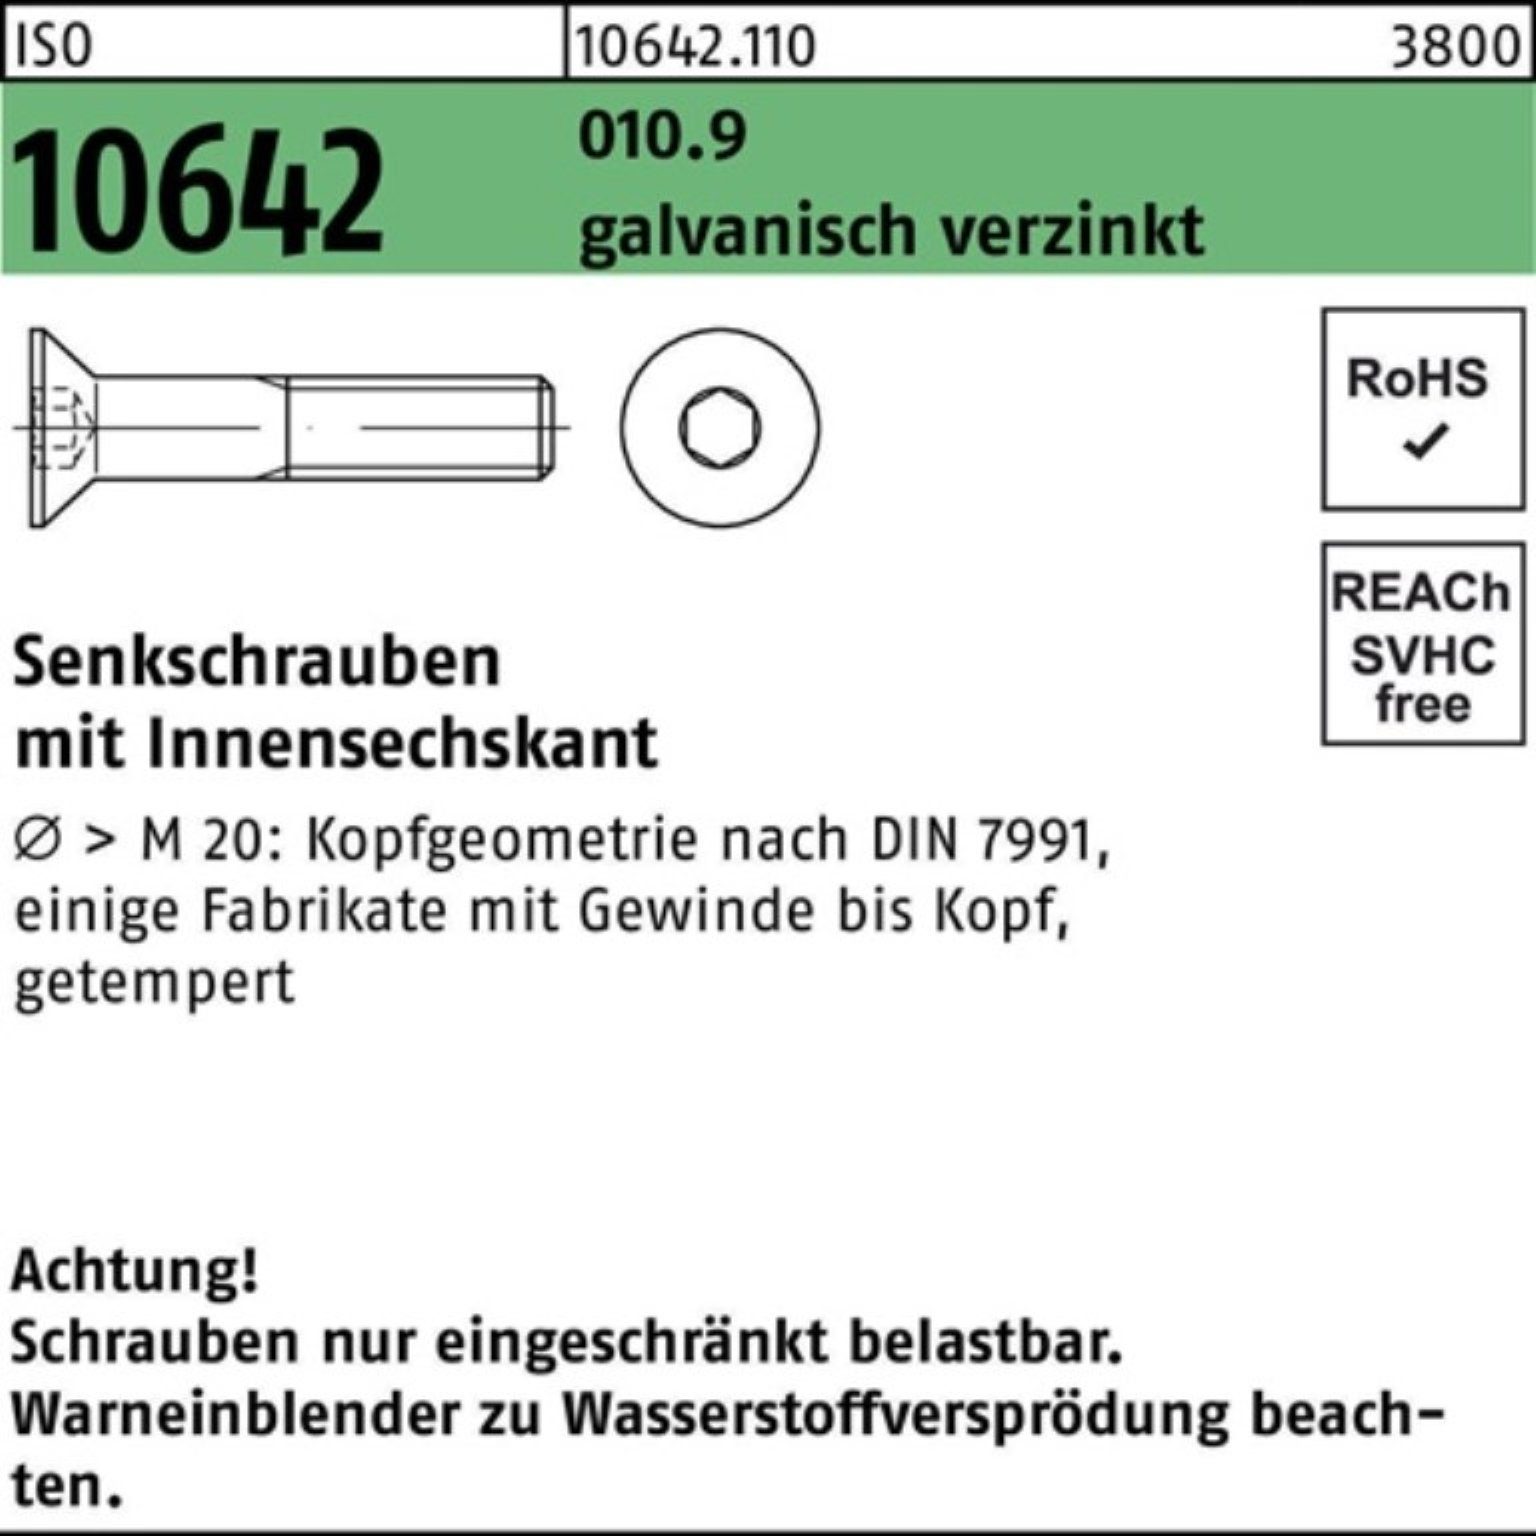 Reyher Senkschraube 200er Pack Senkschraube ISO 10642 Innen-6kt M8x 55 010.9 galv.verz. 20